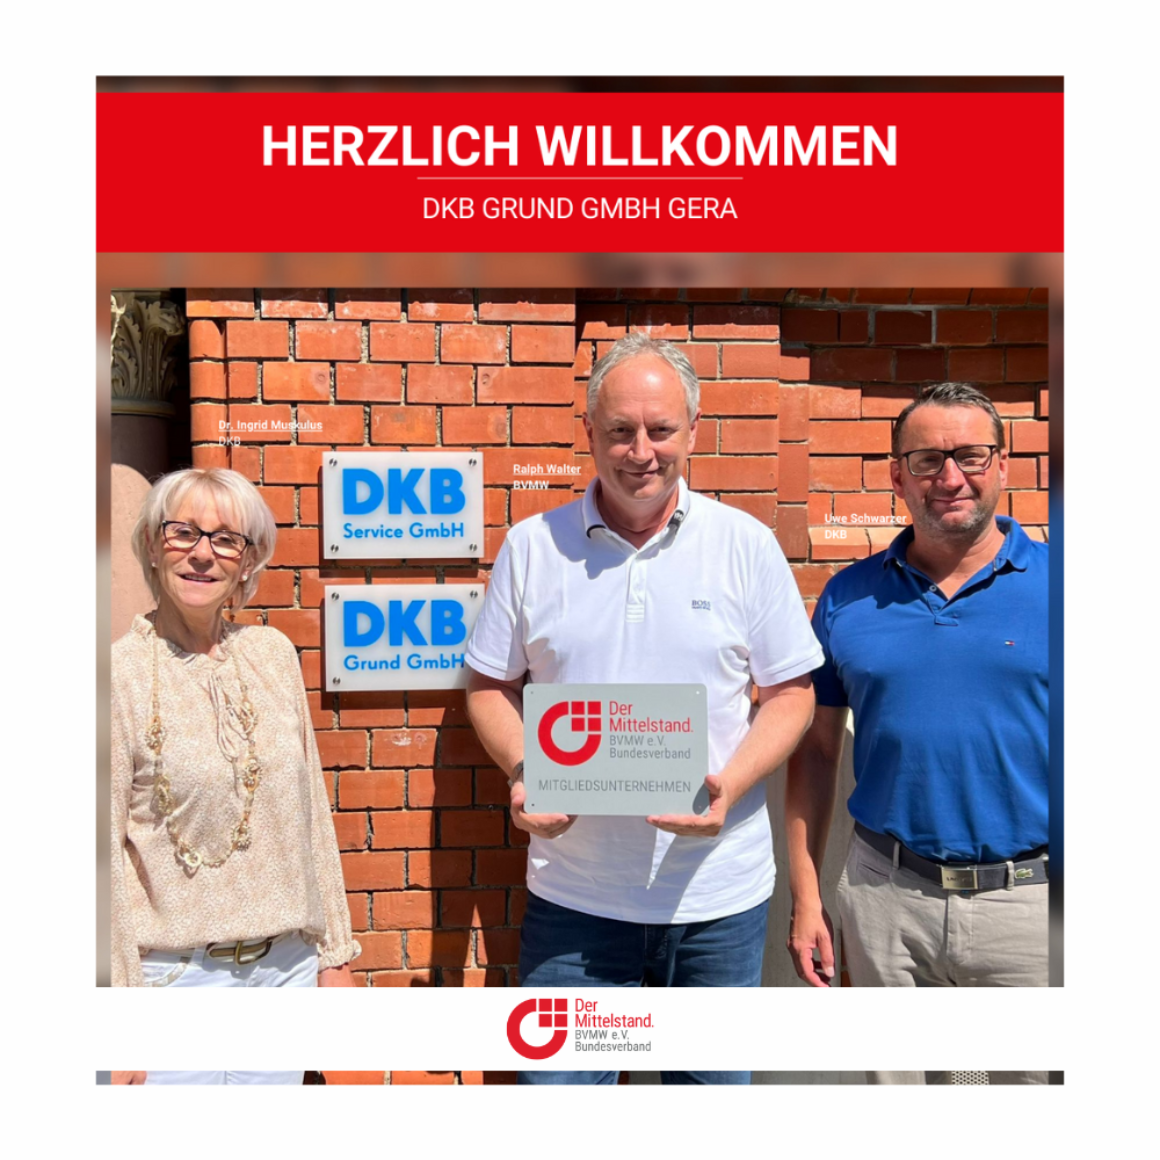 HW DKB Grund GmbH Gera